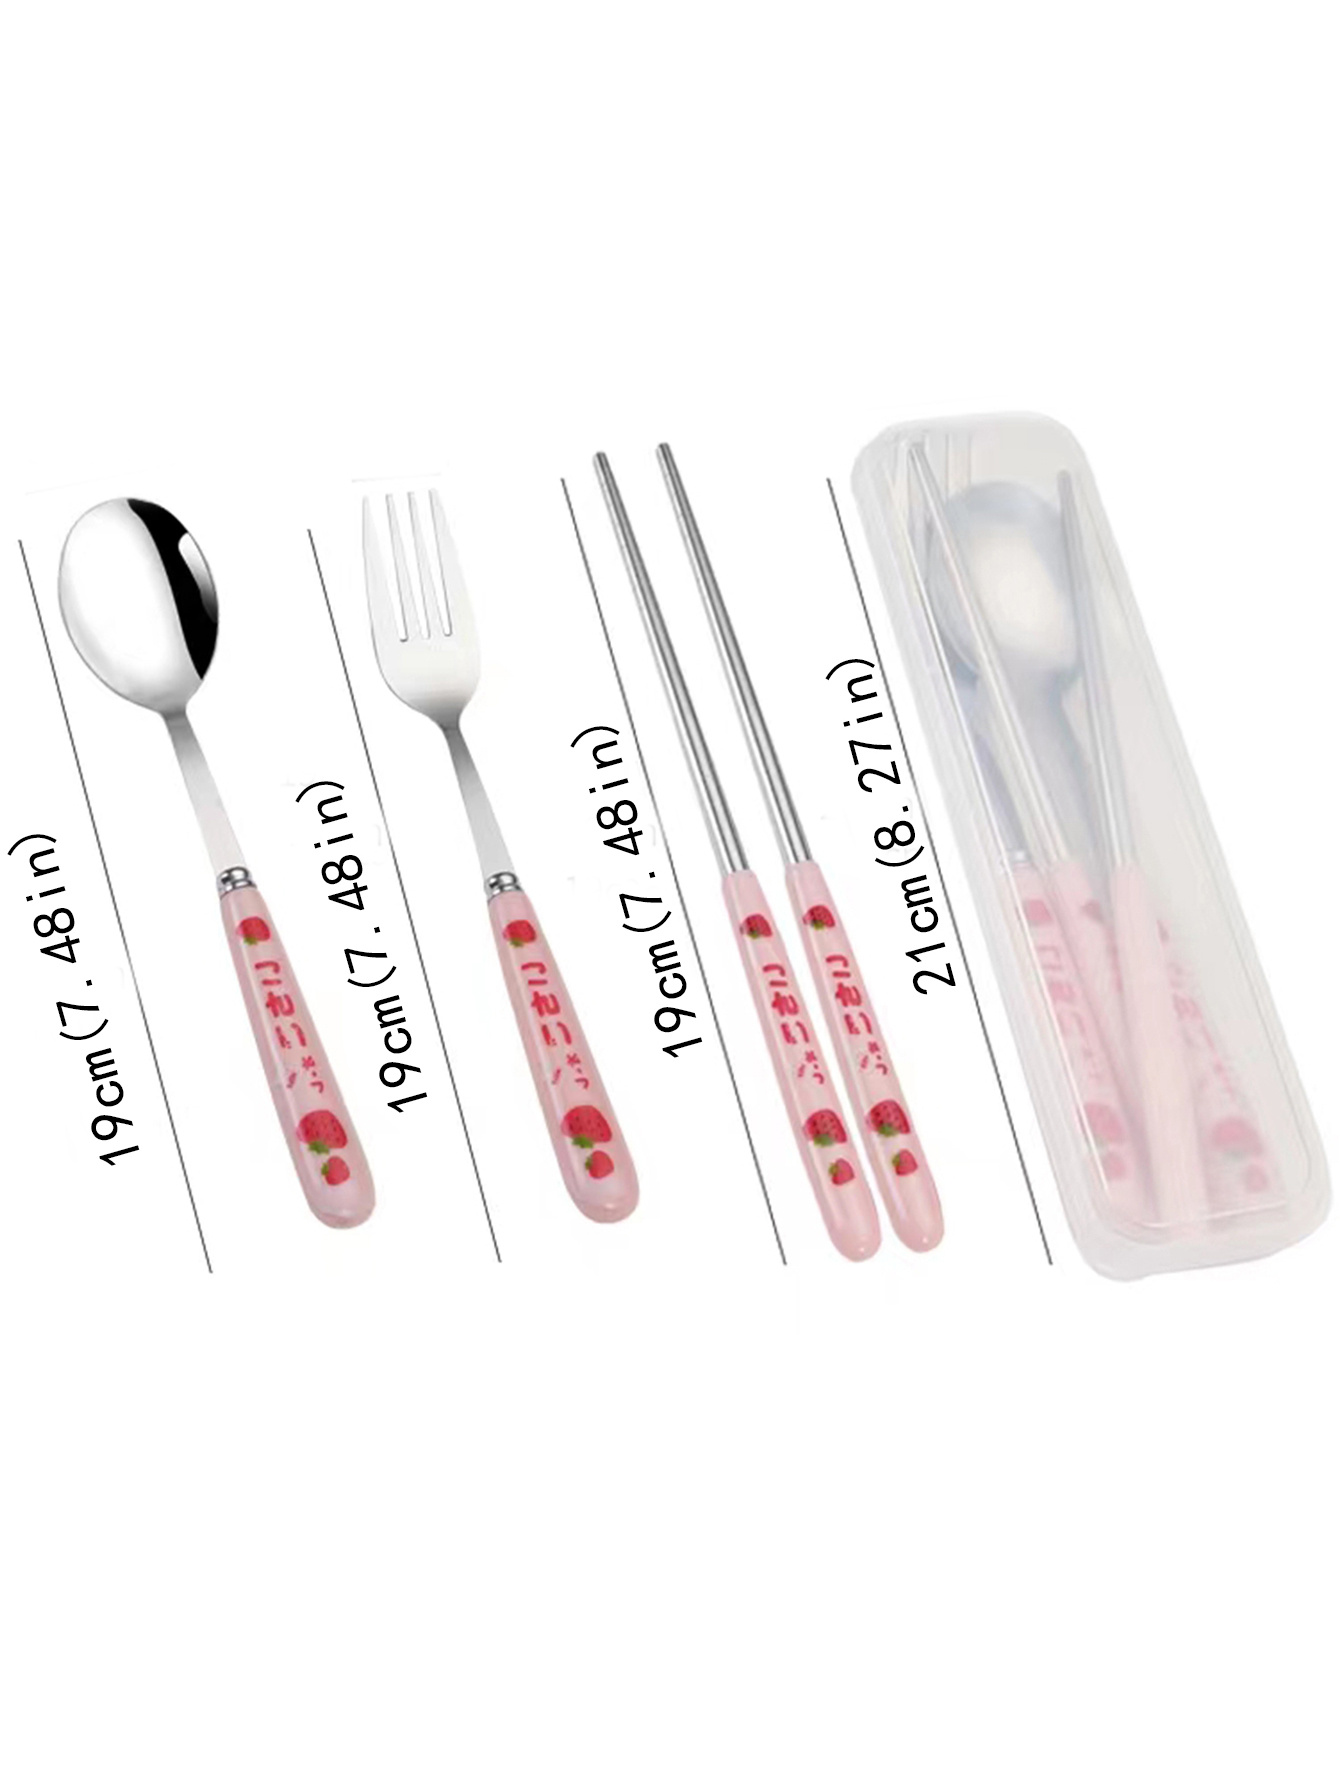 My Melody Lunch Tableware Spoon Chopsticks Fork Utensils Set in